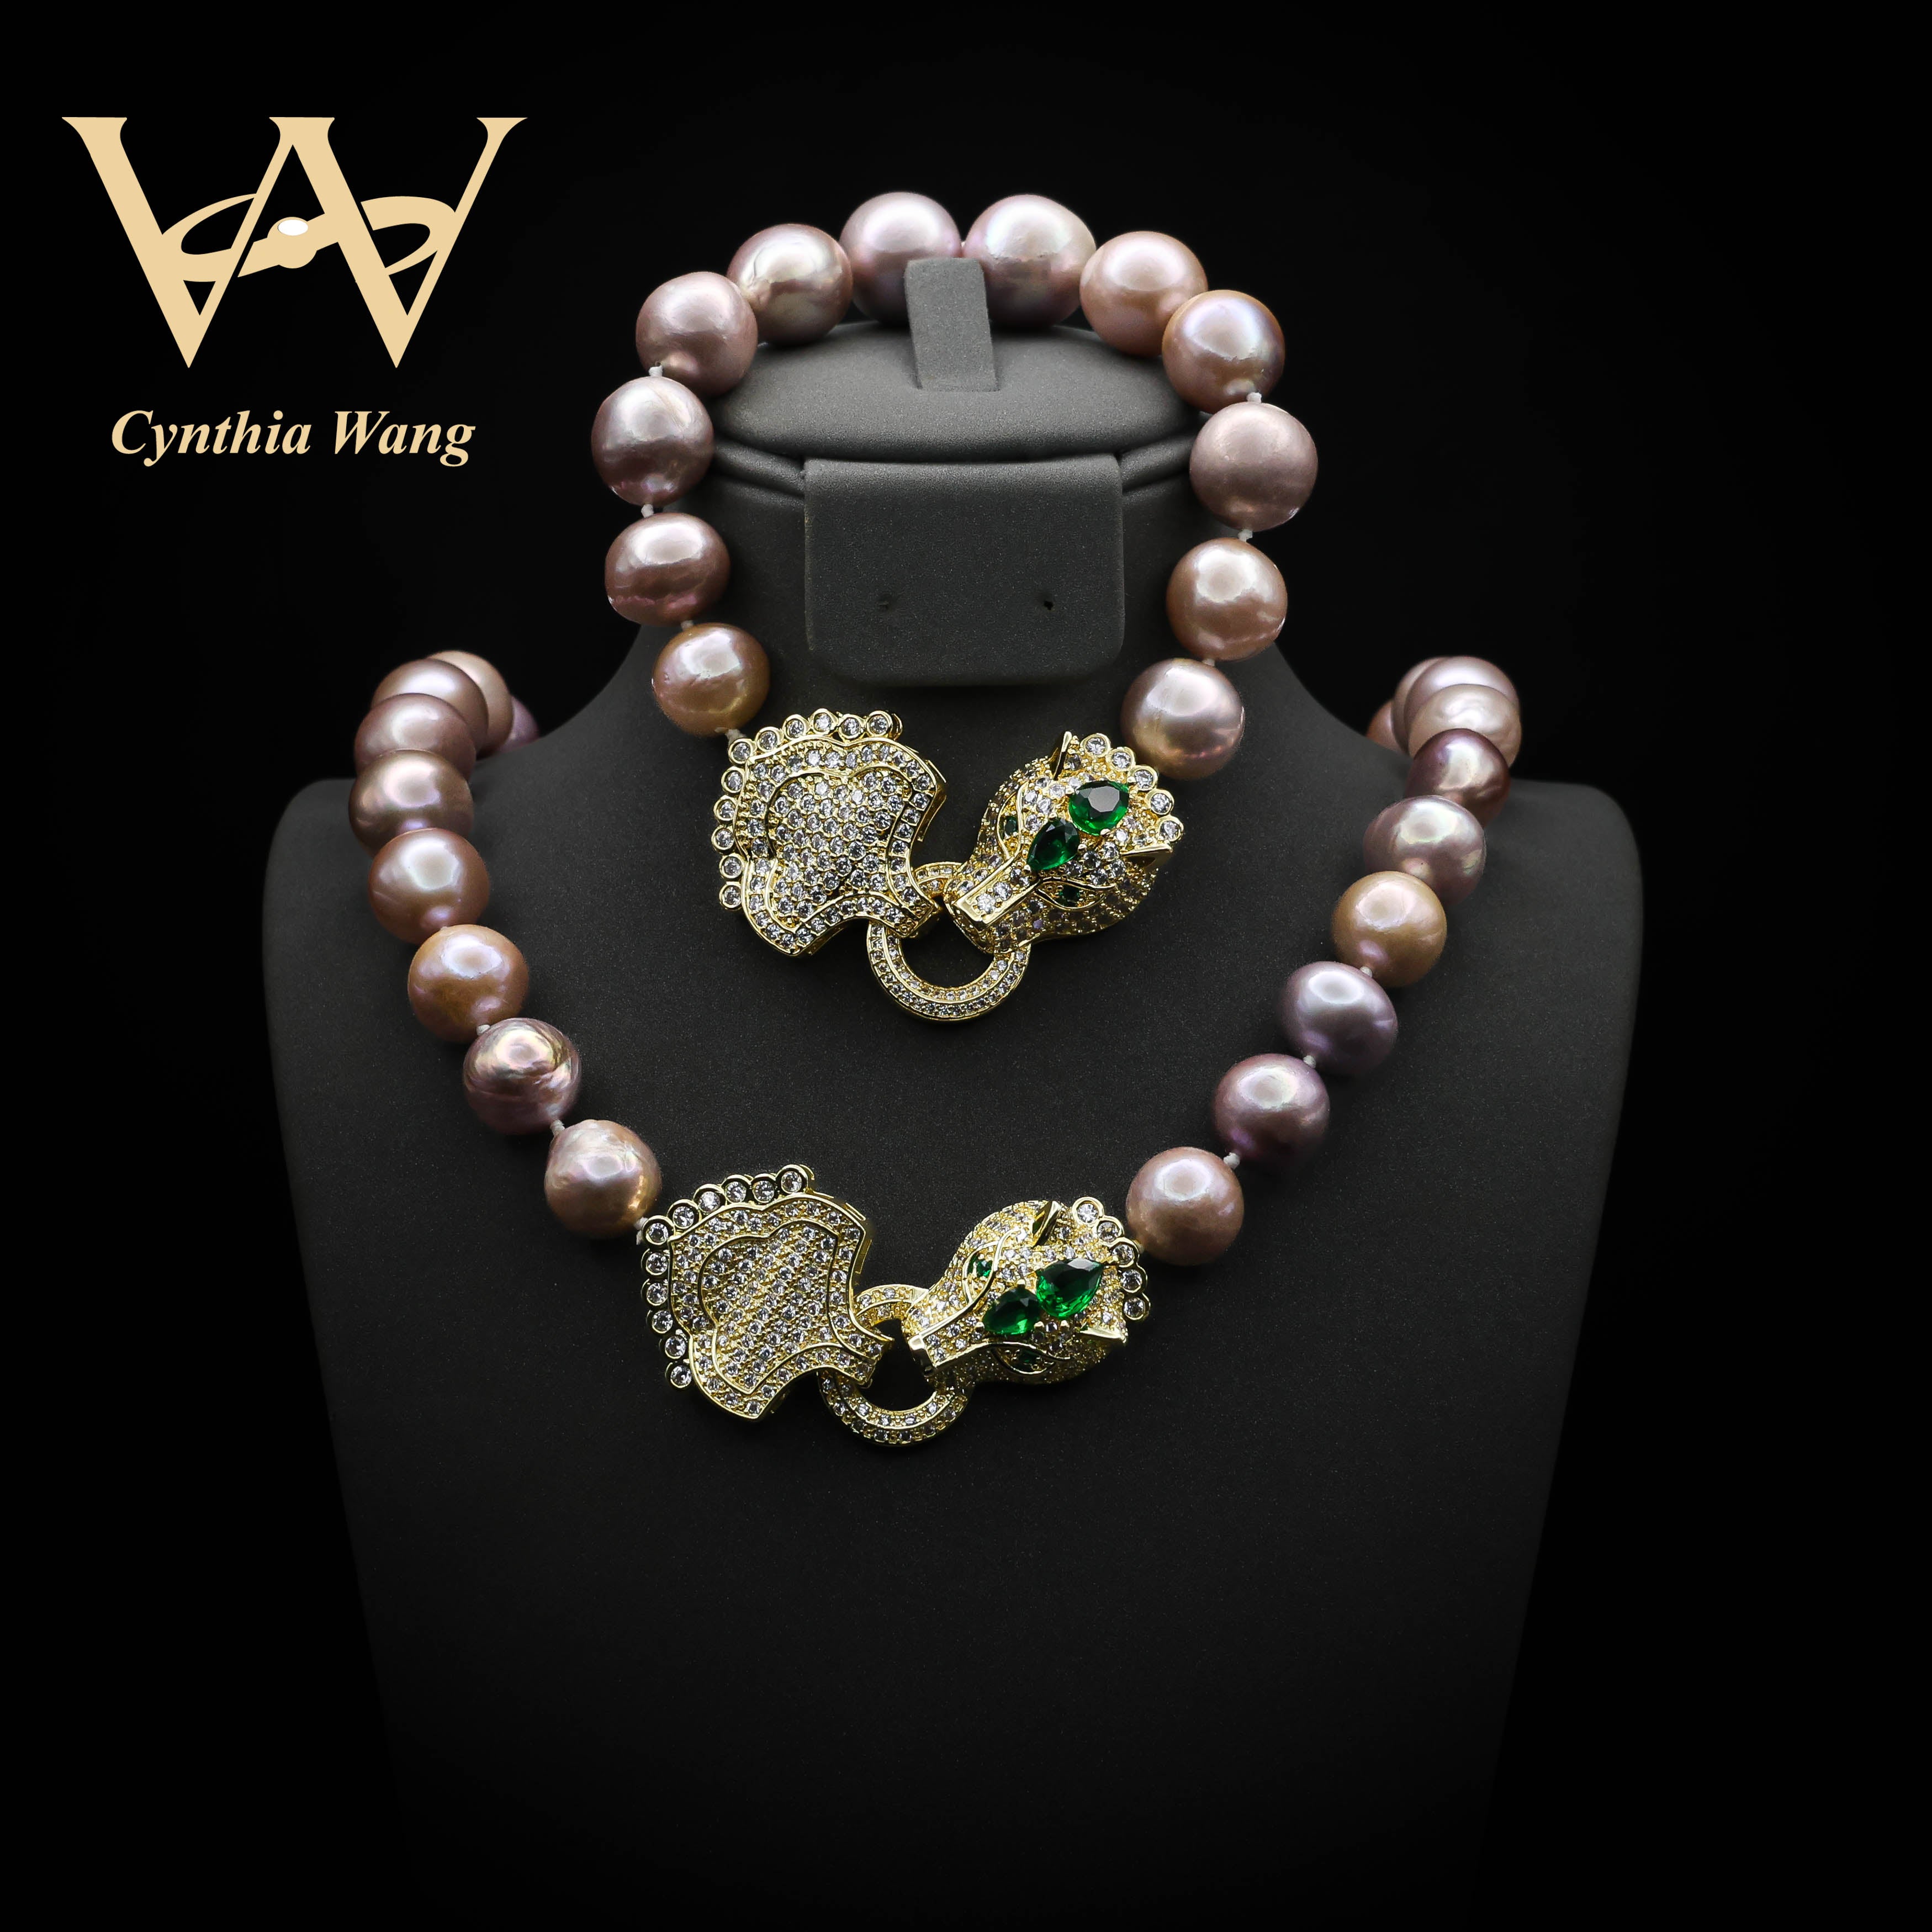 'Wild Cheetah' Pearl Jewelry Set